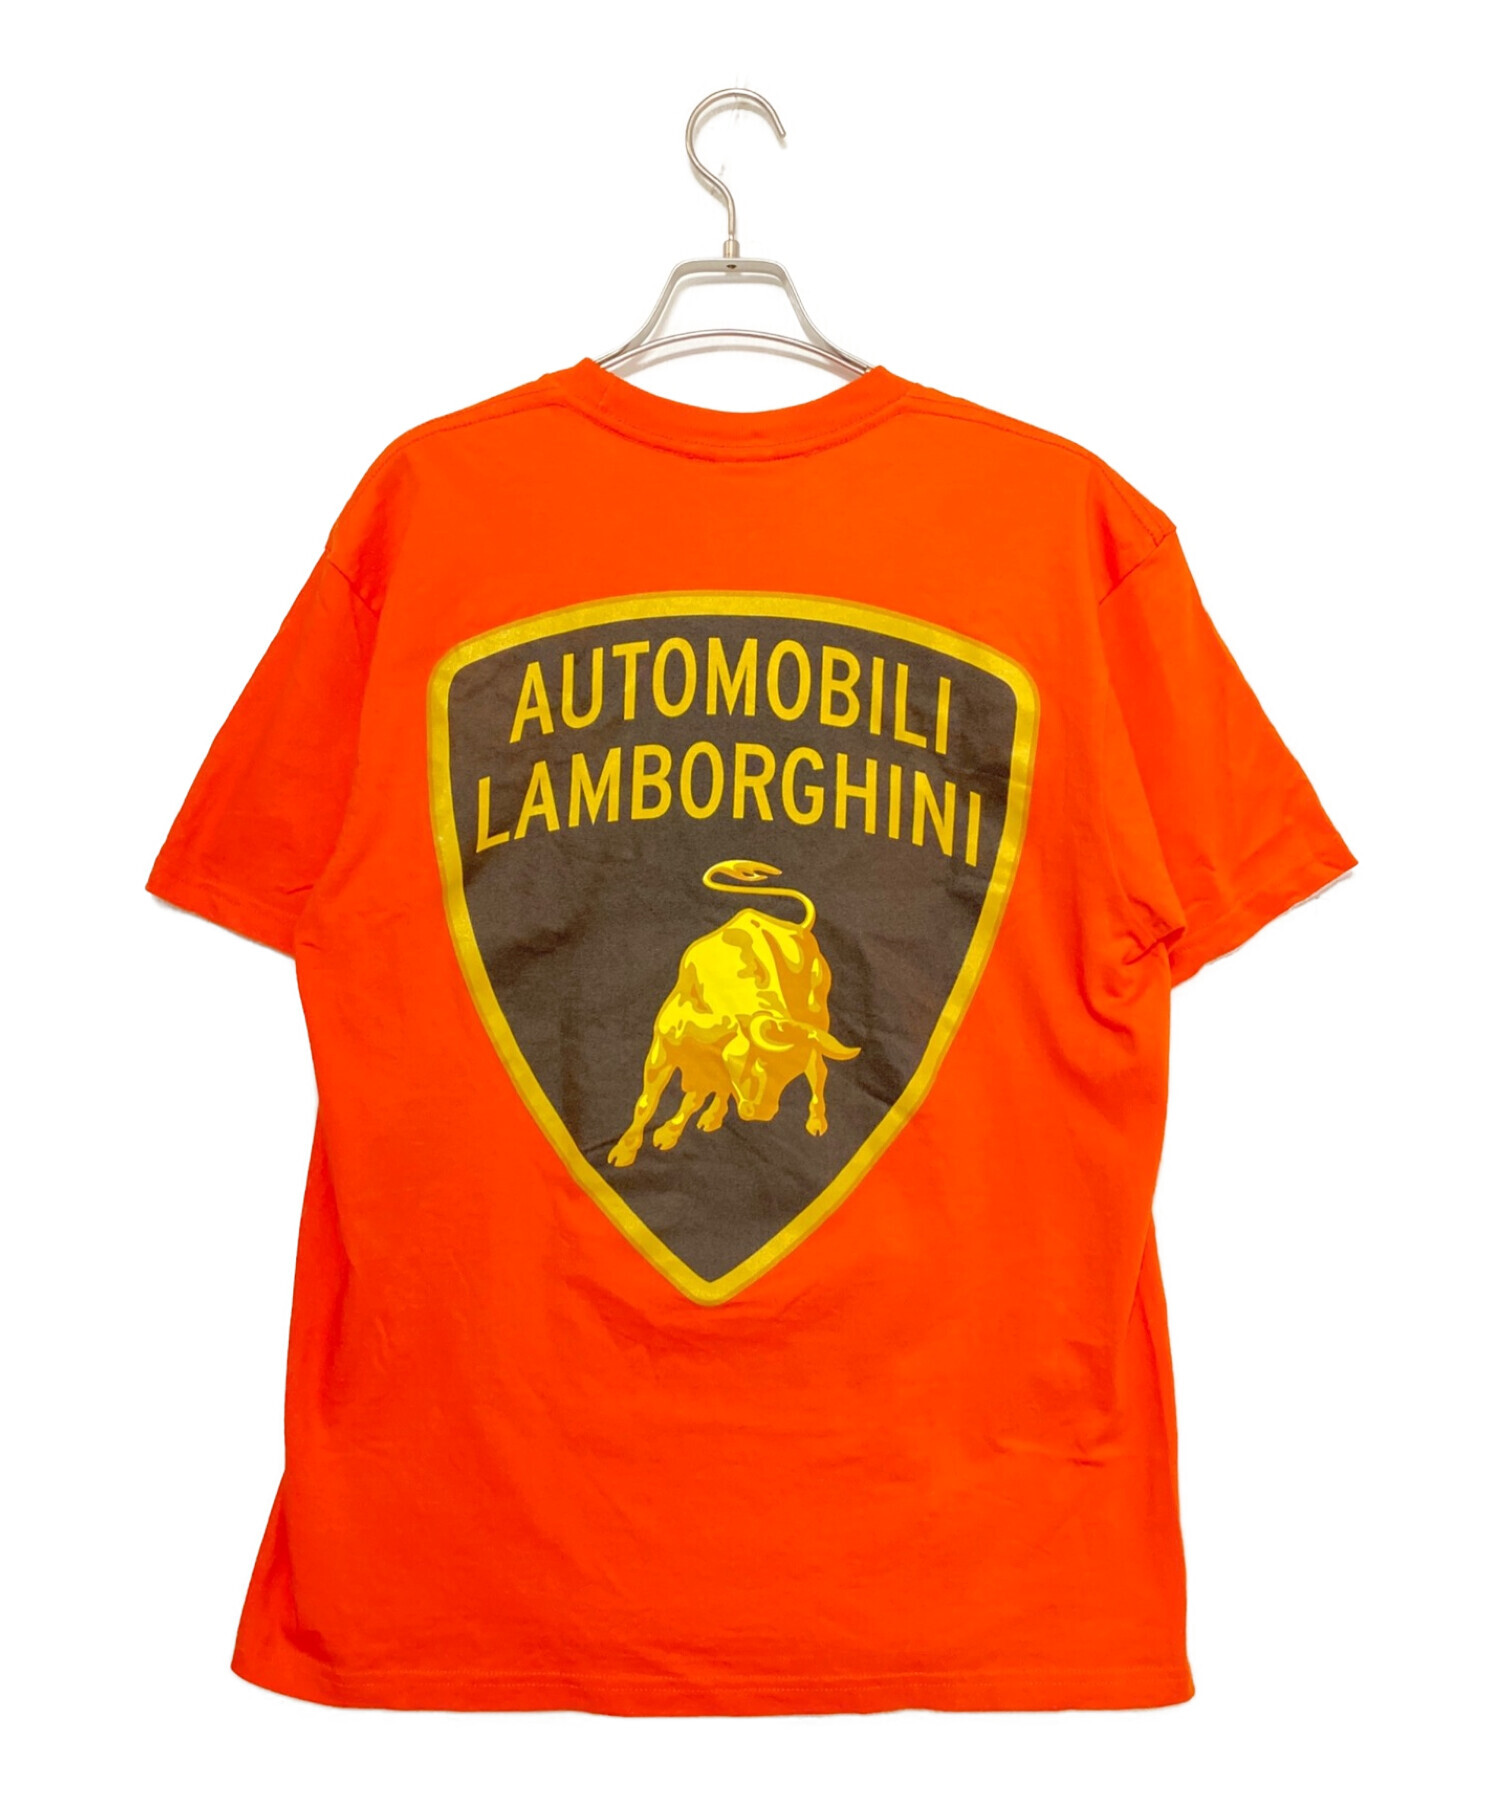 SUPREME (シュプリーム) Automobili Lamborghini Tee オレンジ サイズ:M